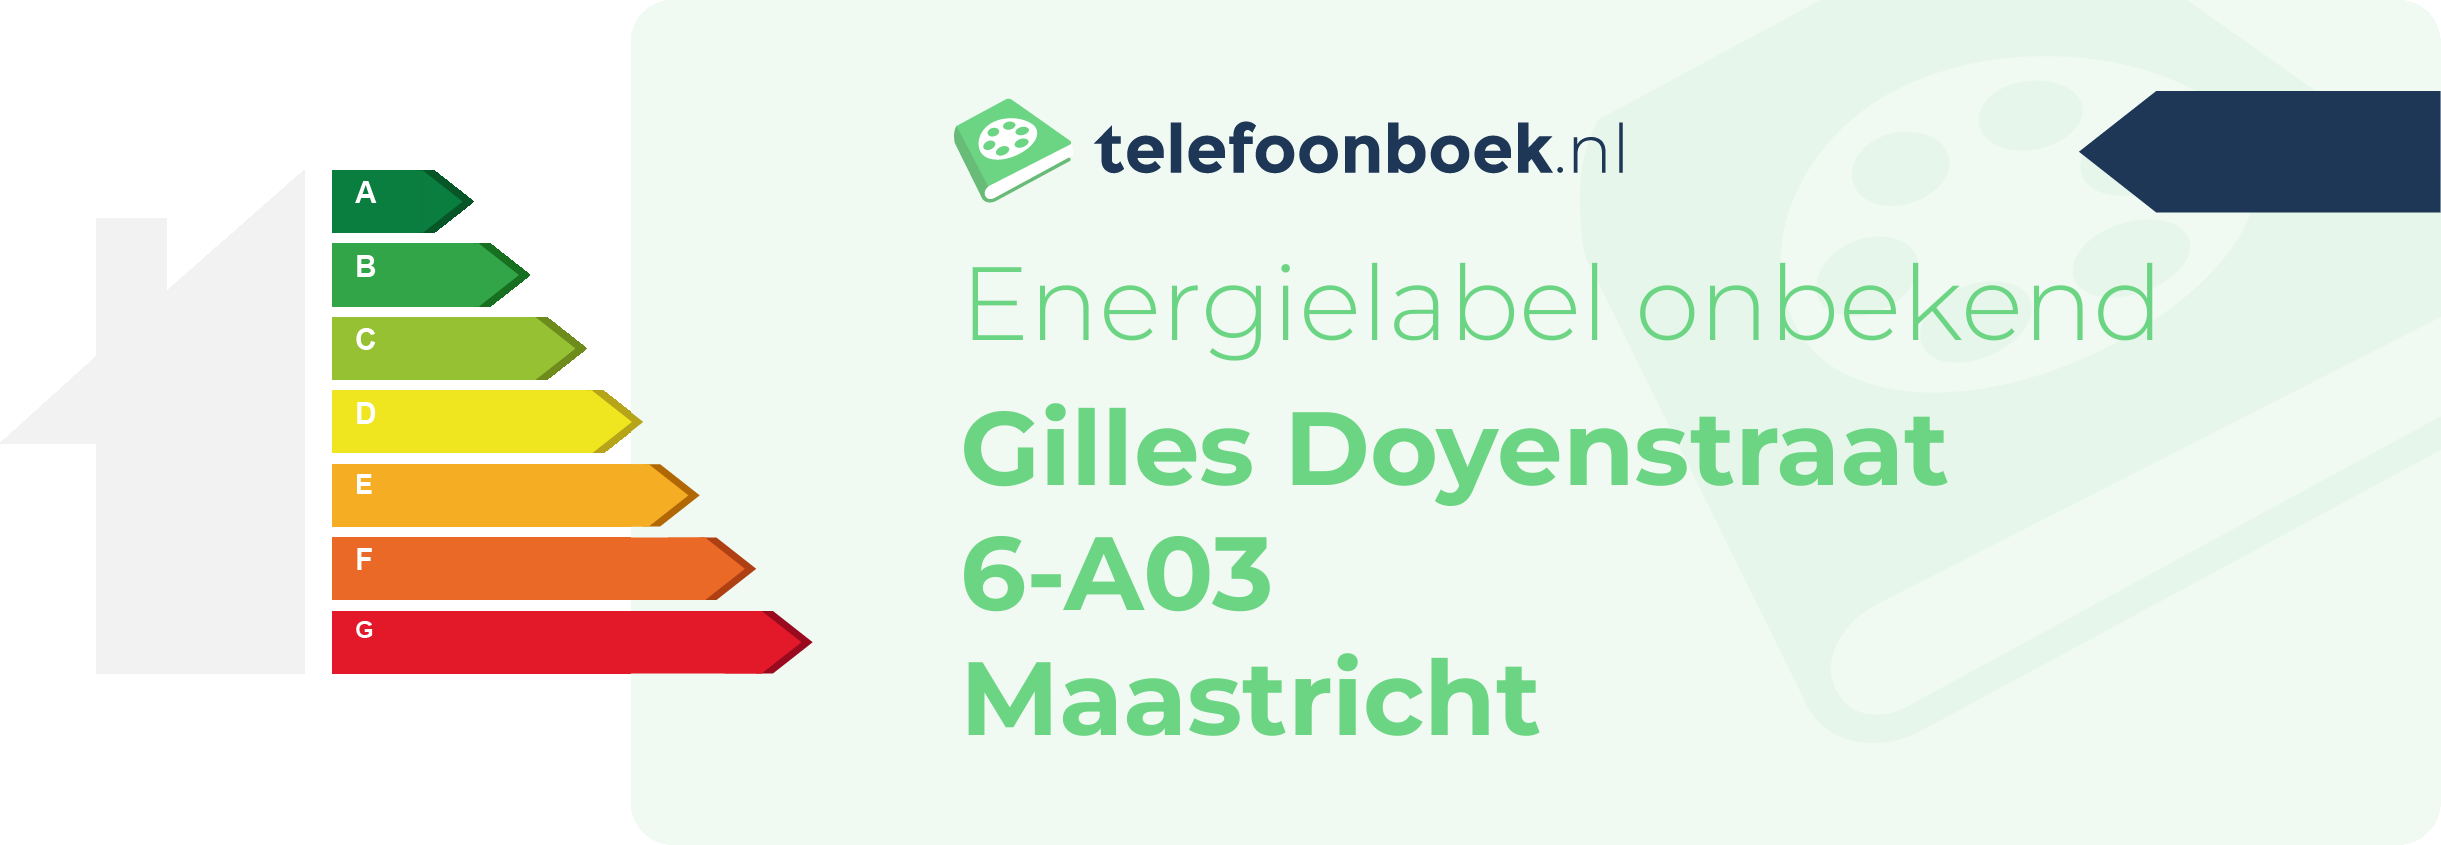 Energielabel Gilles Doyenstraat 6-A03 Maastricht